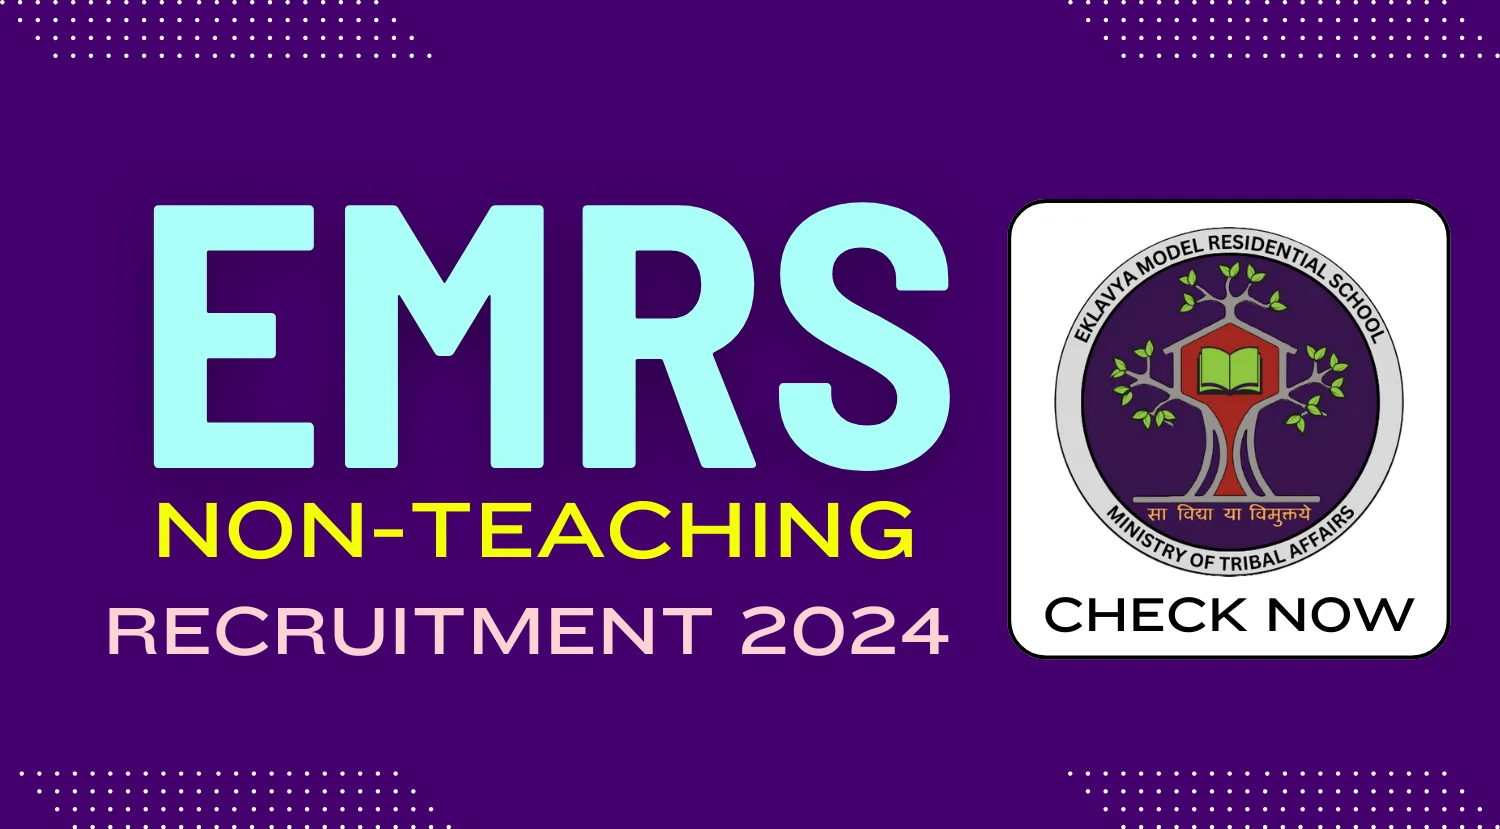 EMRS Non-Teaching Recruitment 2024